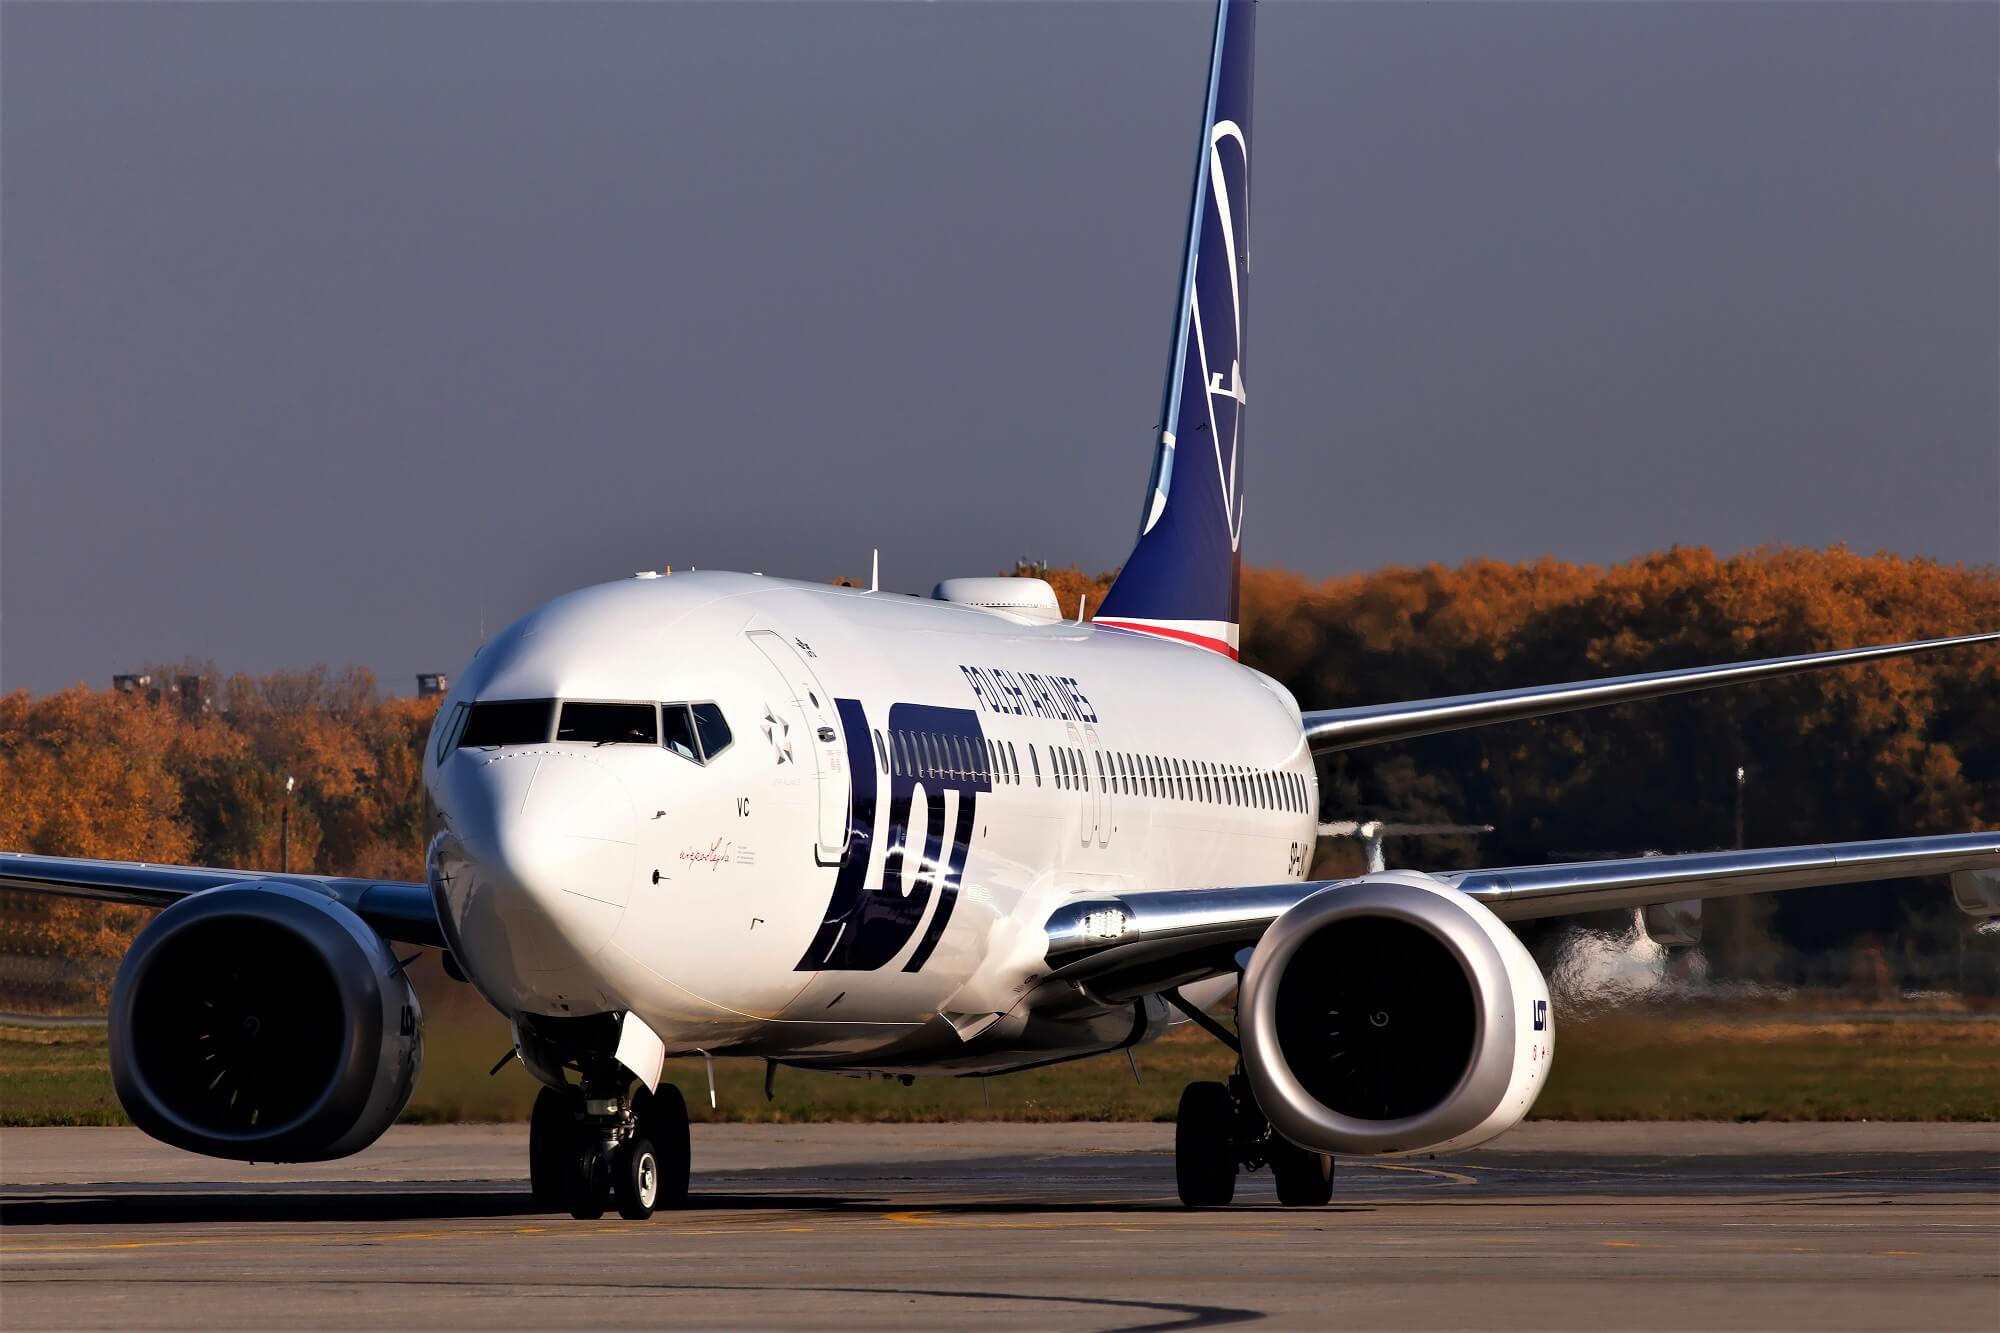 ✈ Fleet, LOT Polish Airlines